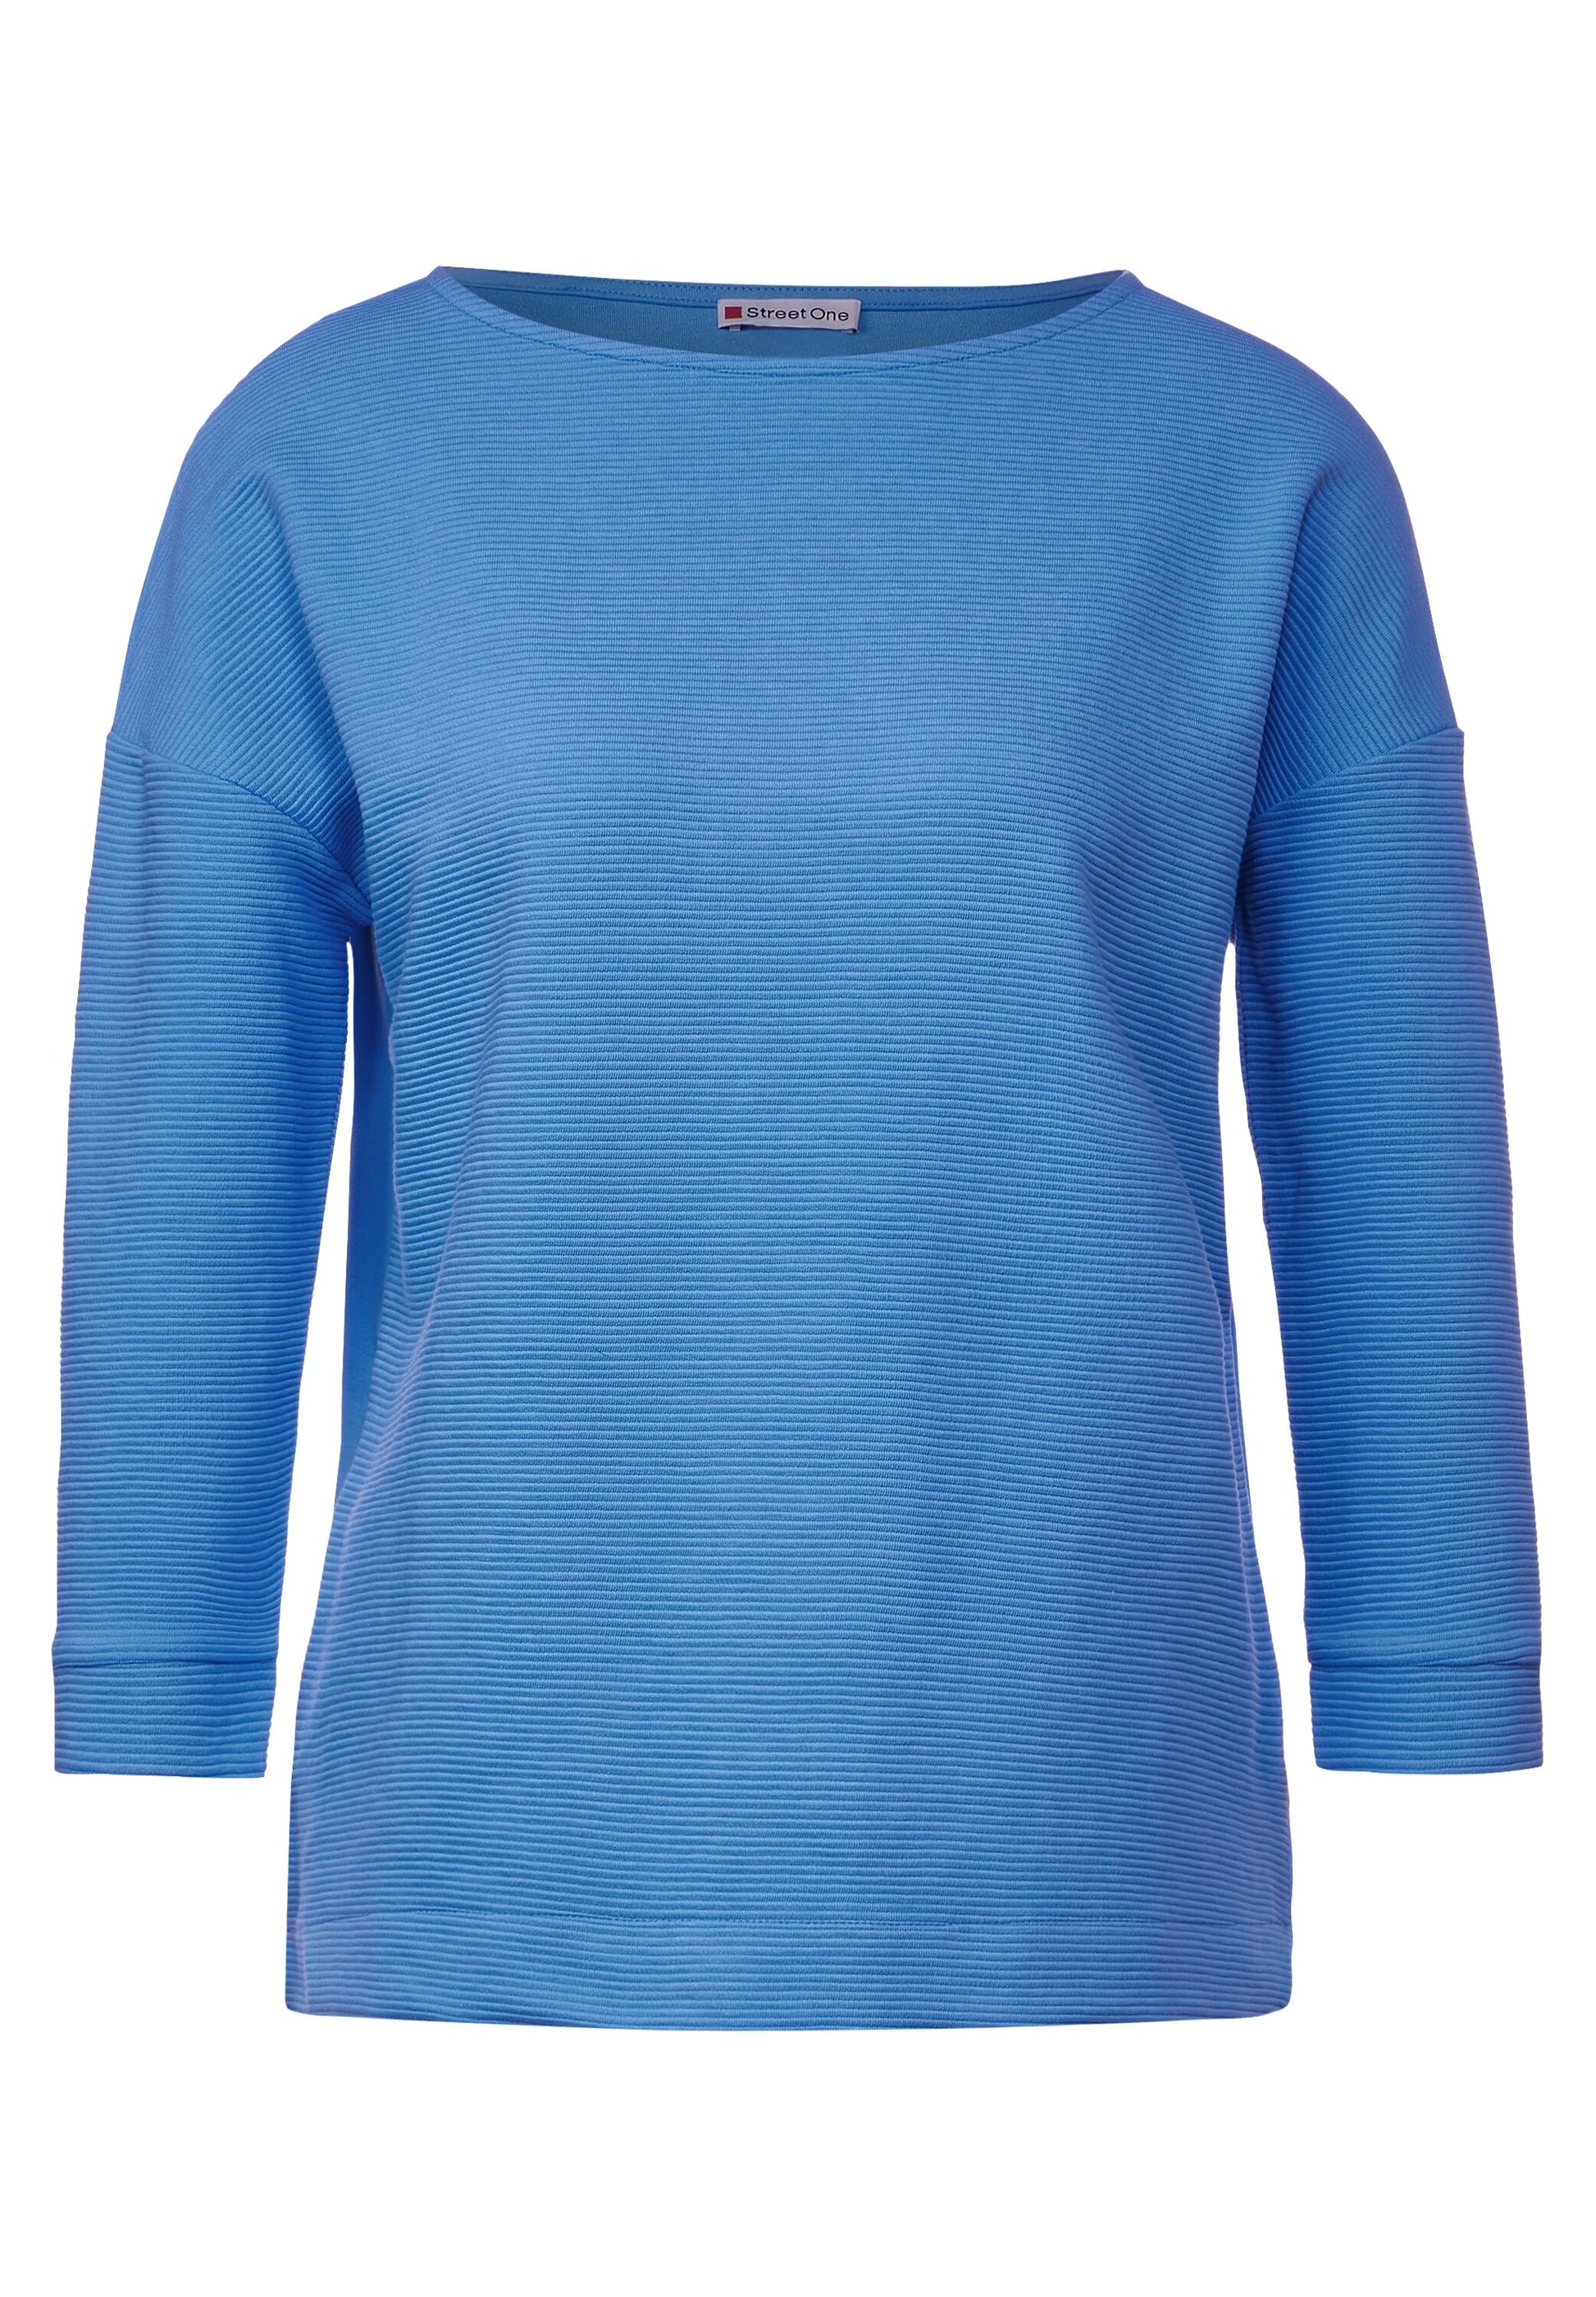 street one-damen-Struktur Mix Shirt-A32102815572 in der Farbe light spring blue